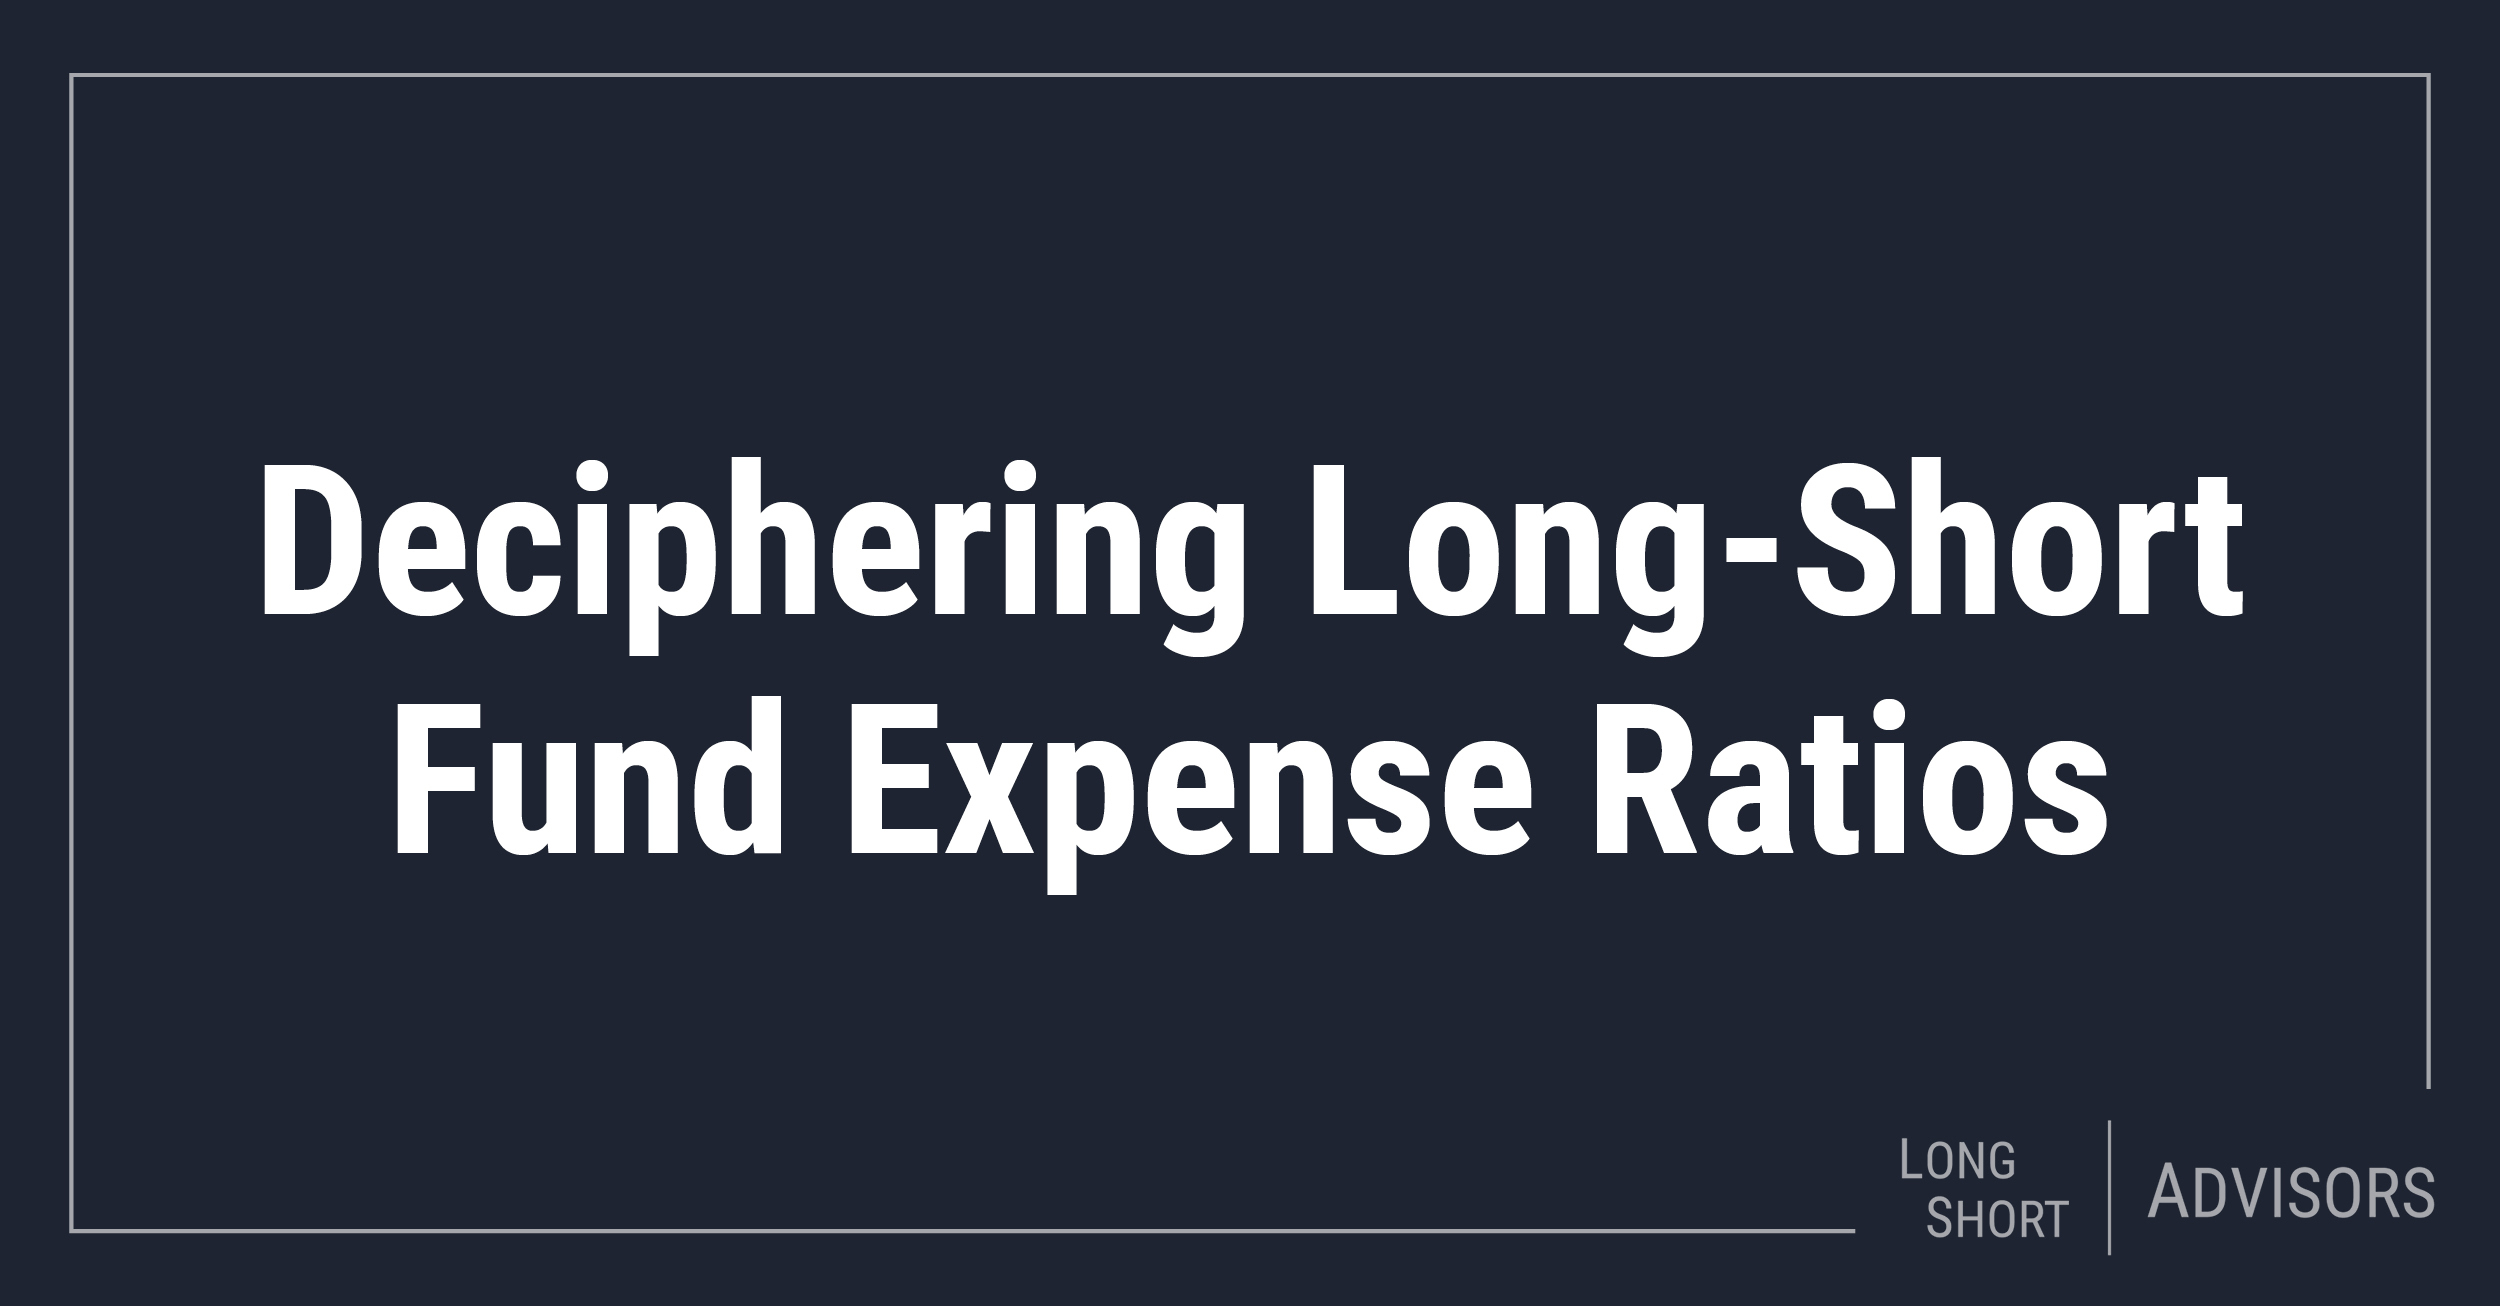 Deciphering Long-Short Fund Expense Ratios